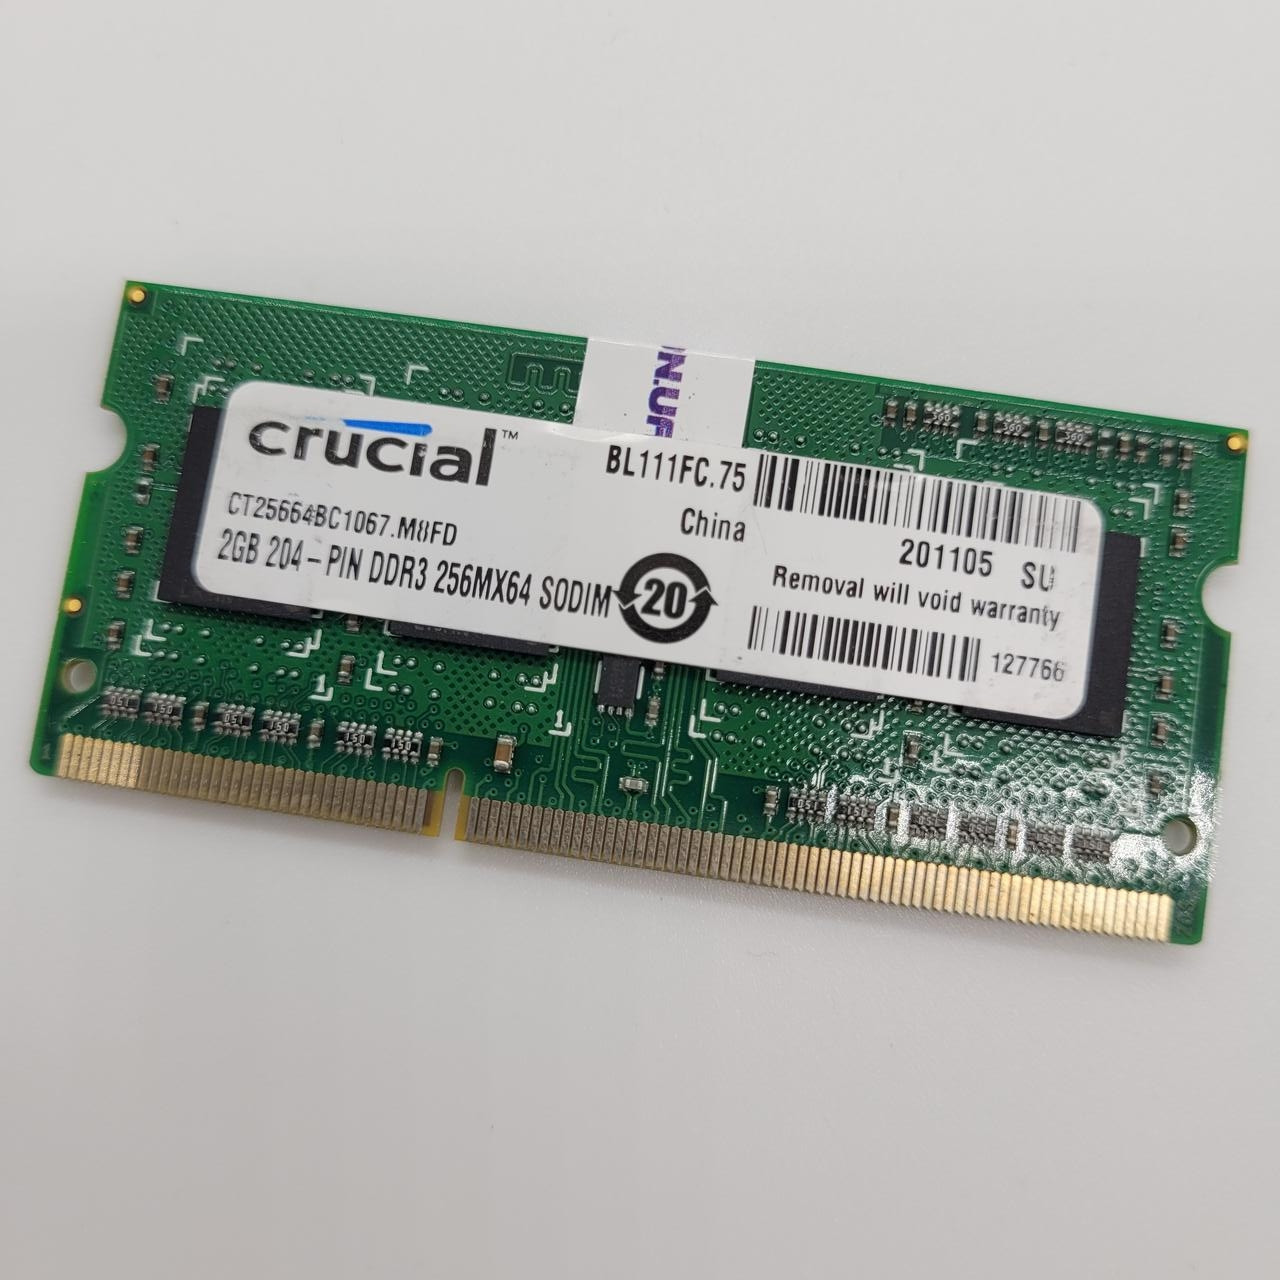 Оперативна пам'ять для ноутбука Crucial SODIMM DDR3 2Gb 1066MHz 8500S 1R8 CL7 (CT25664BC1067.M8FD) Б/У